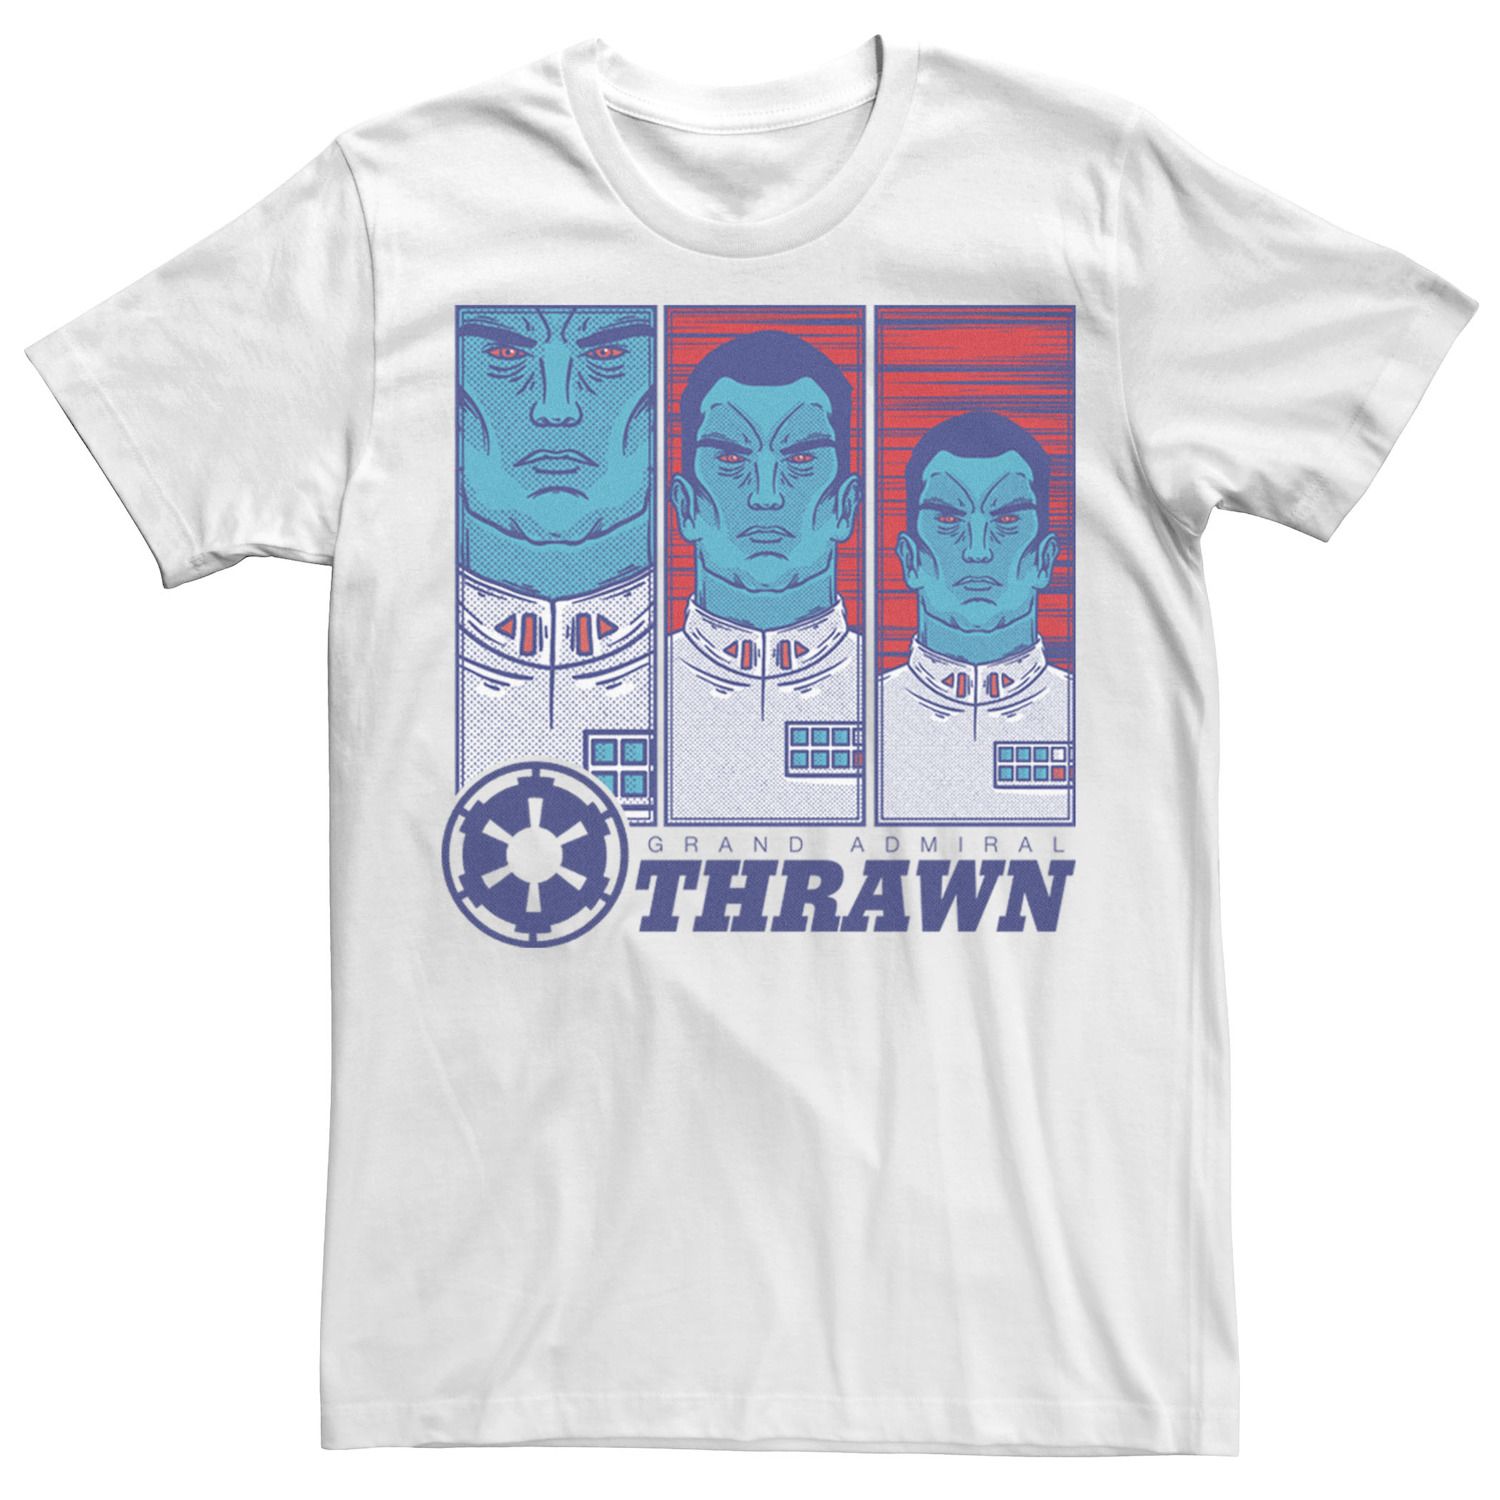 thrawn t shirt